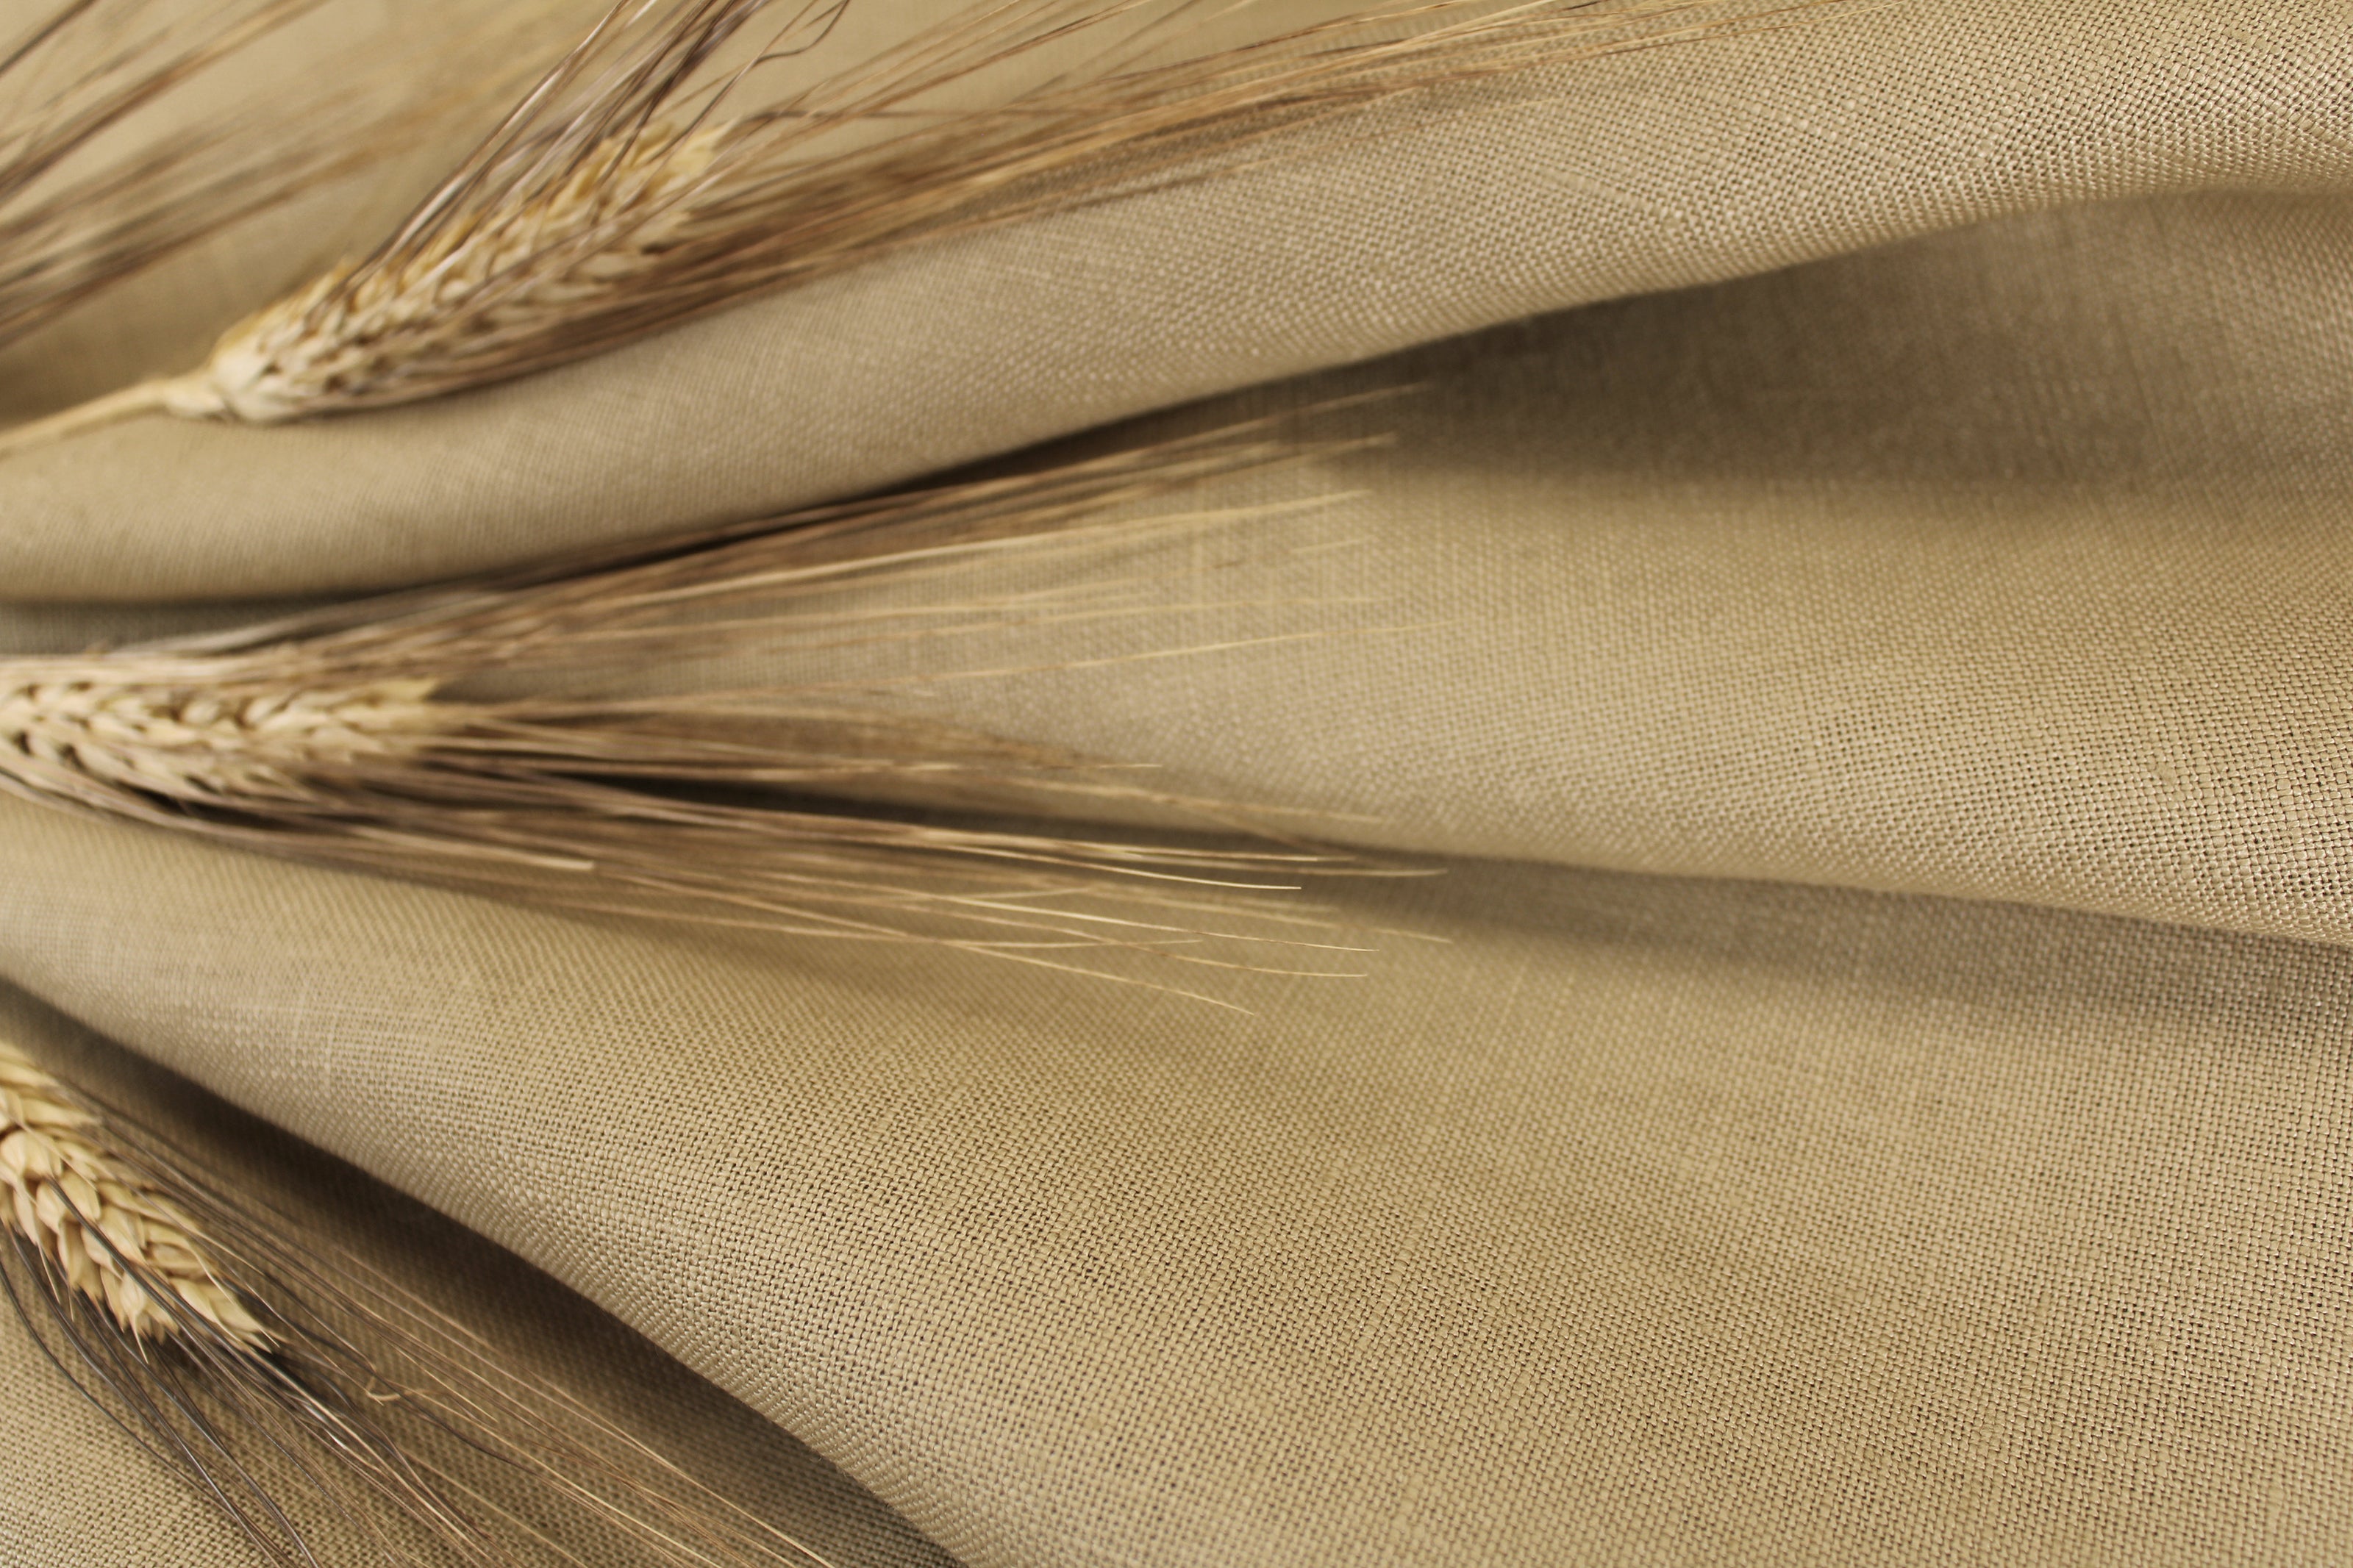 Premium IRISH 100% Linen Fabric by the Yard / Whole wheat Linen Fabric / Buy Linen Online